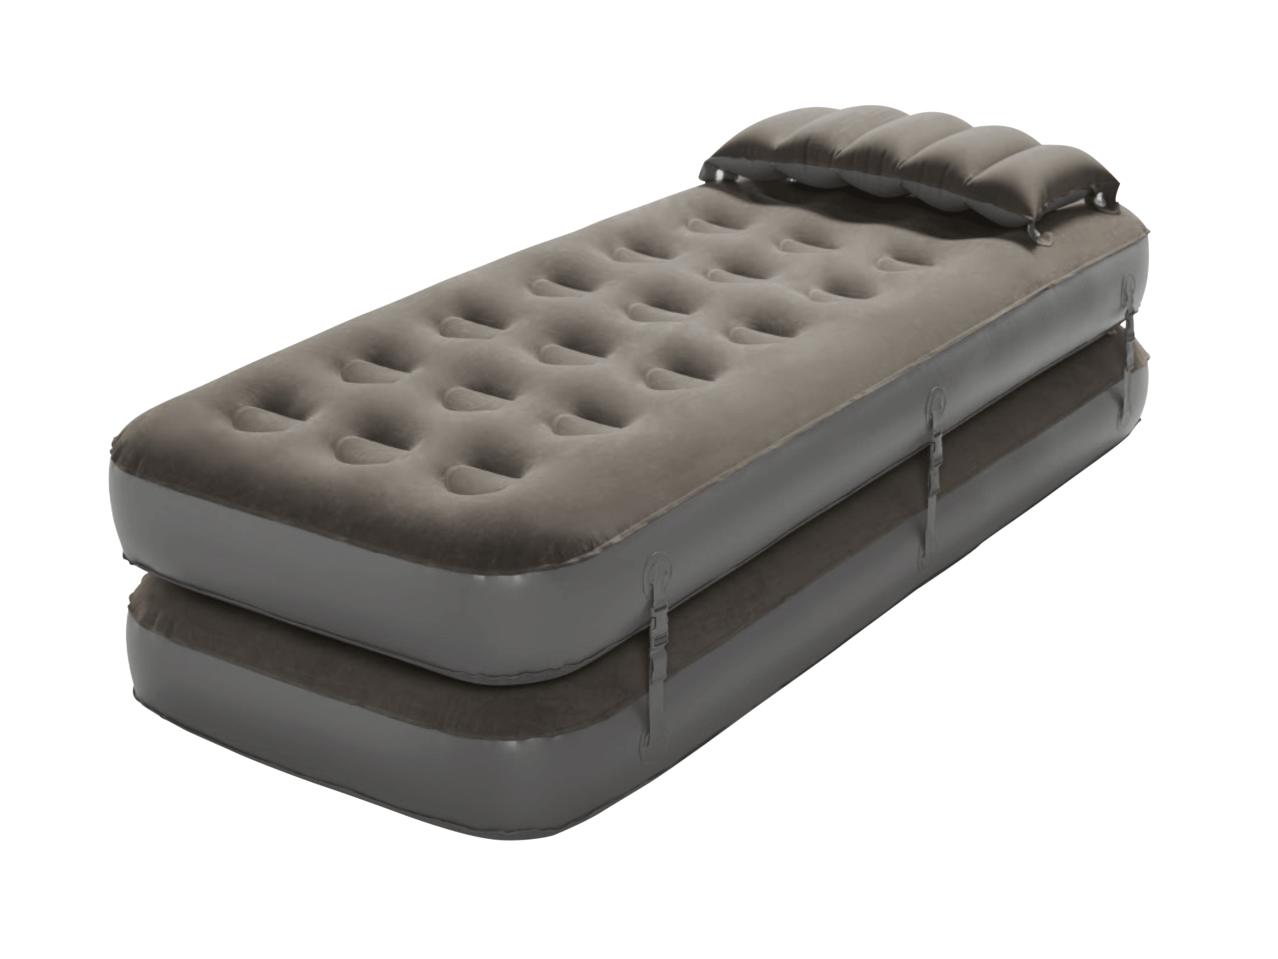 MERADISO Comfort Double Air Bed